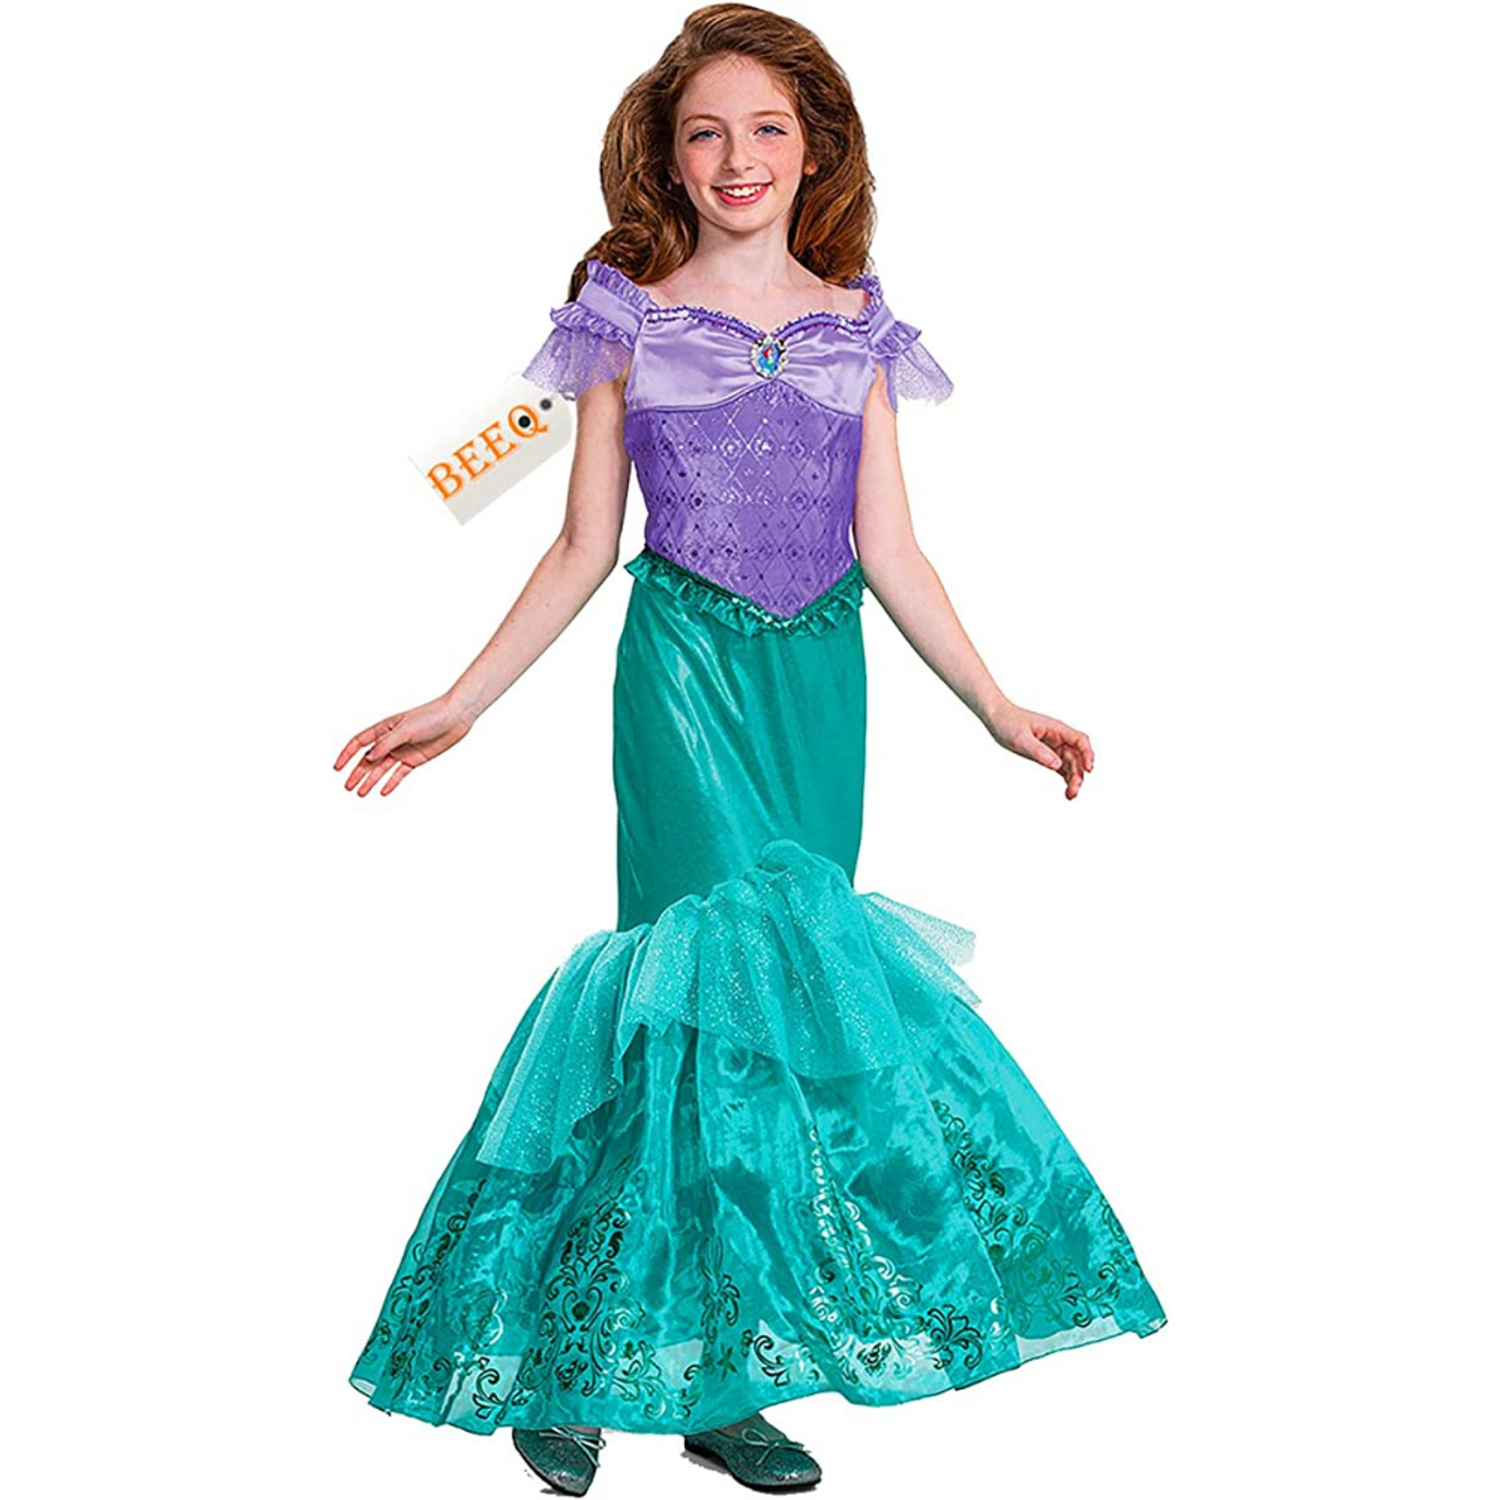 Disguise Girl's Prestige Disney Princess Dress Pretend Play Costume Dress-Up (Ariel, XS (3T-4T)) - image 4 of 4